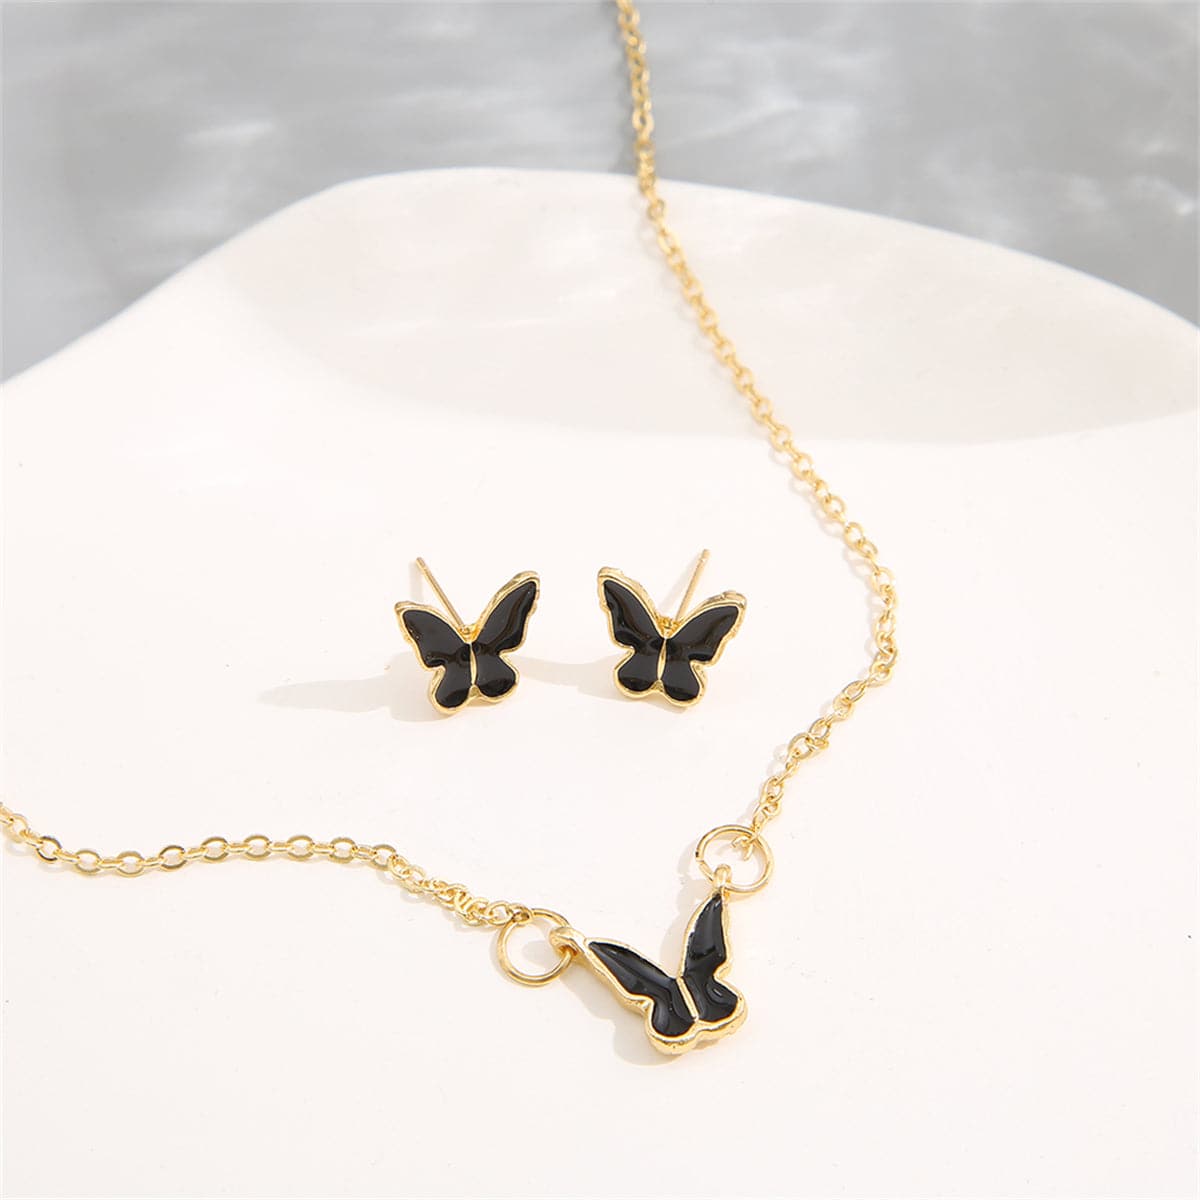 Black Enamel & 18K Gold-Plated Butterfly Pendant Necklace Set